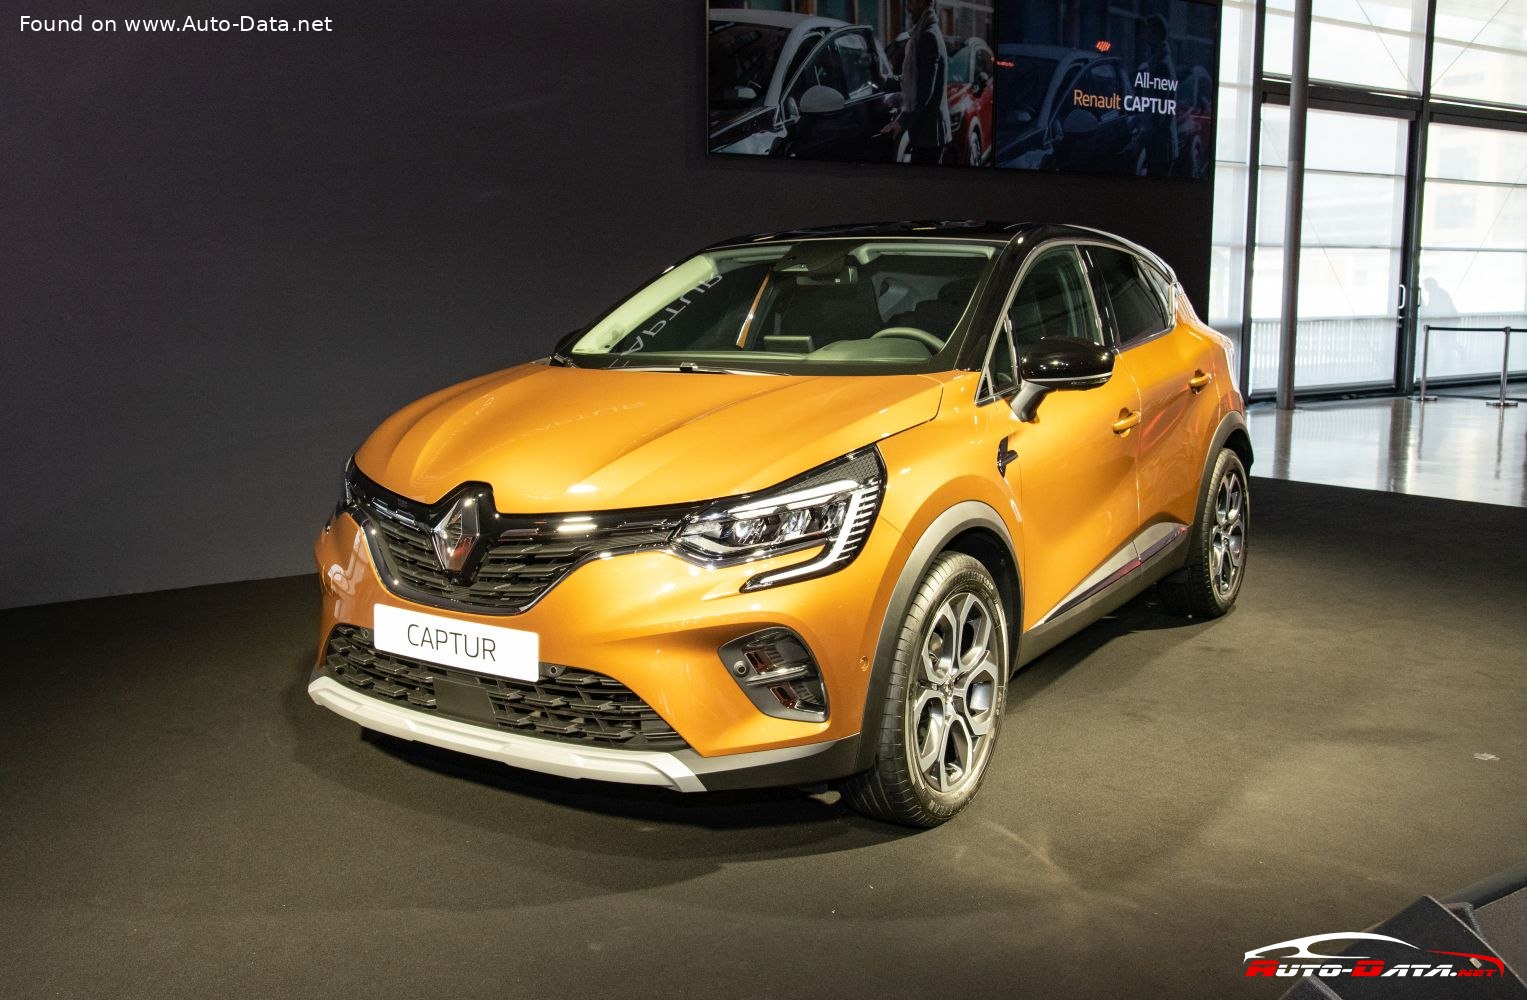 Renault Captur Mileage (13-20 km/l) - Captur Petrol and Diesel